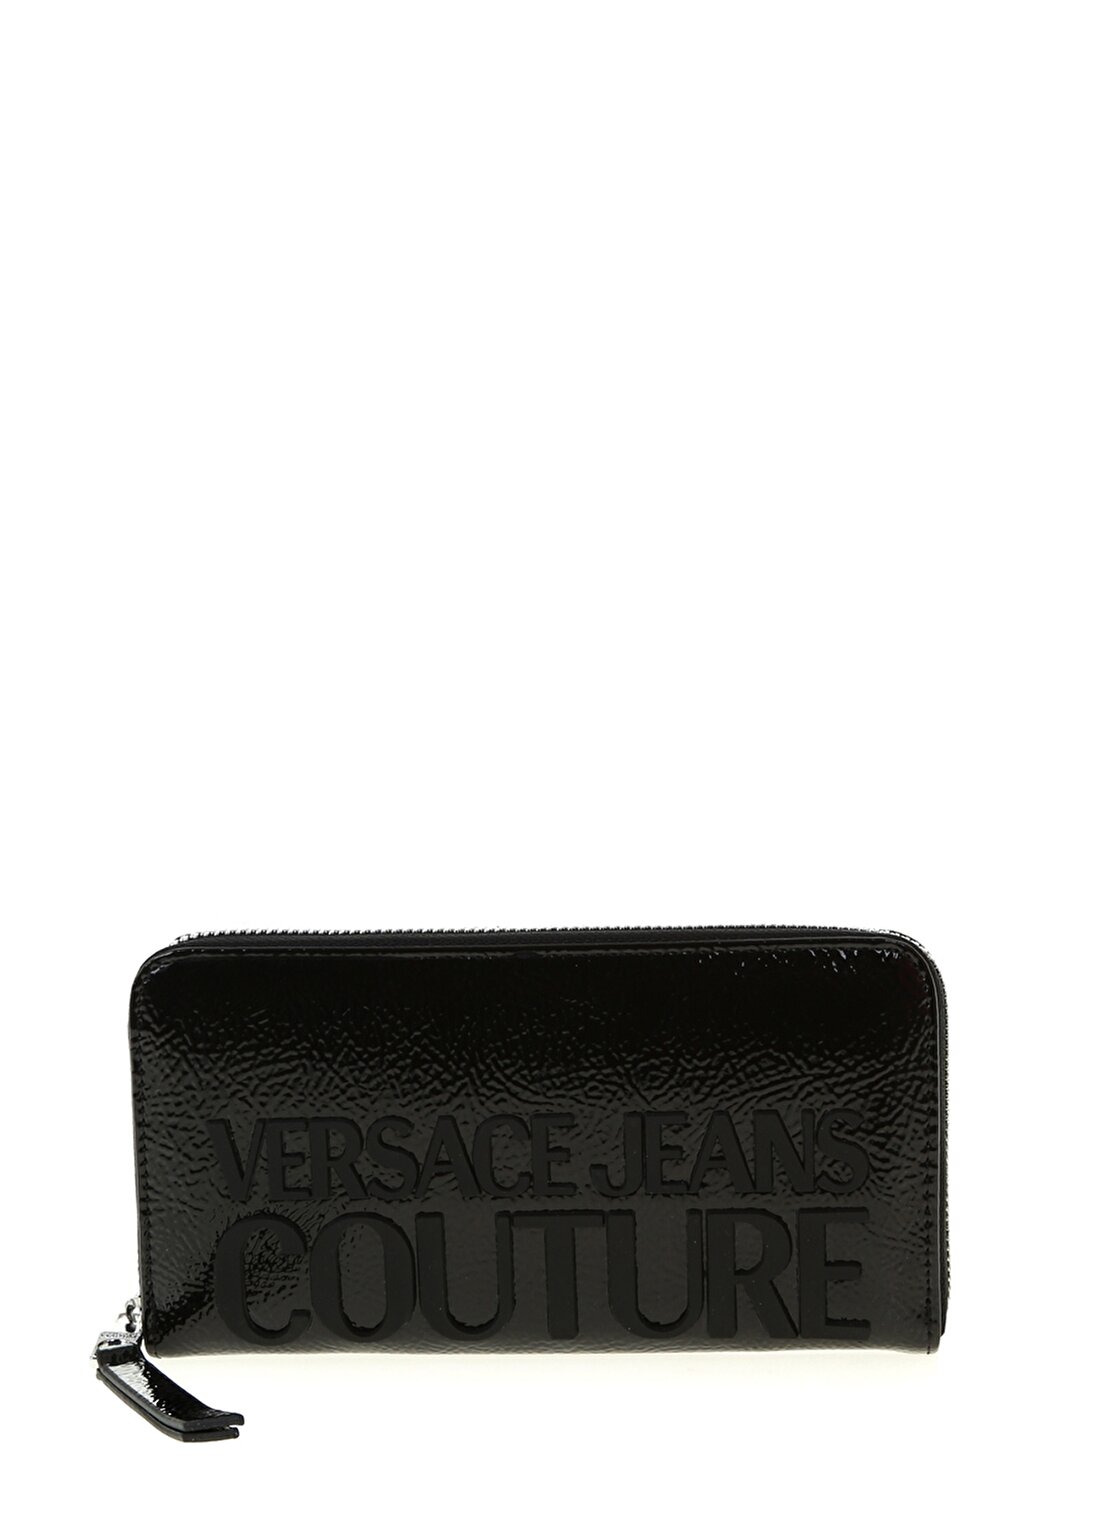 Versace Jeans Siyah Cüzdan